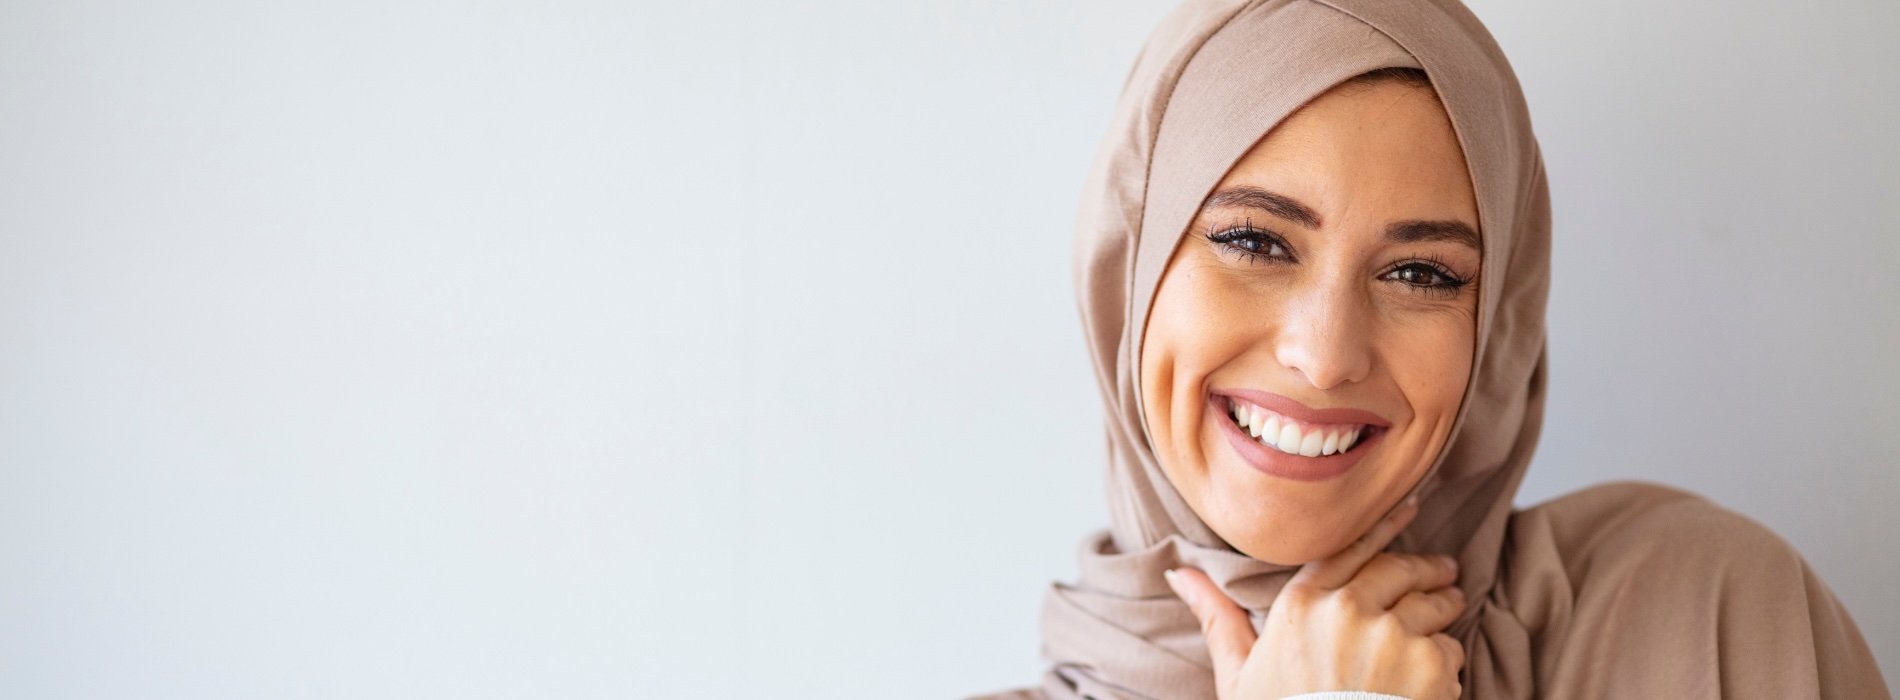 Smiling woman wearing head scarf